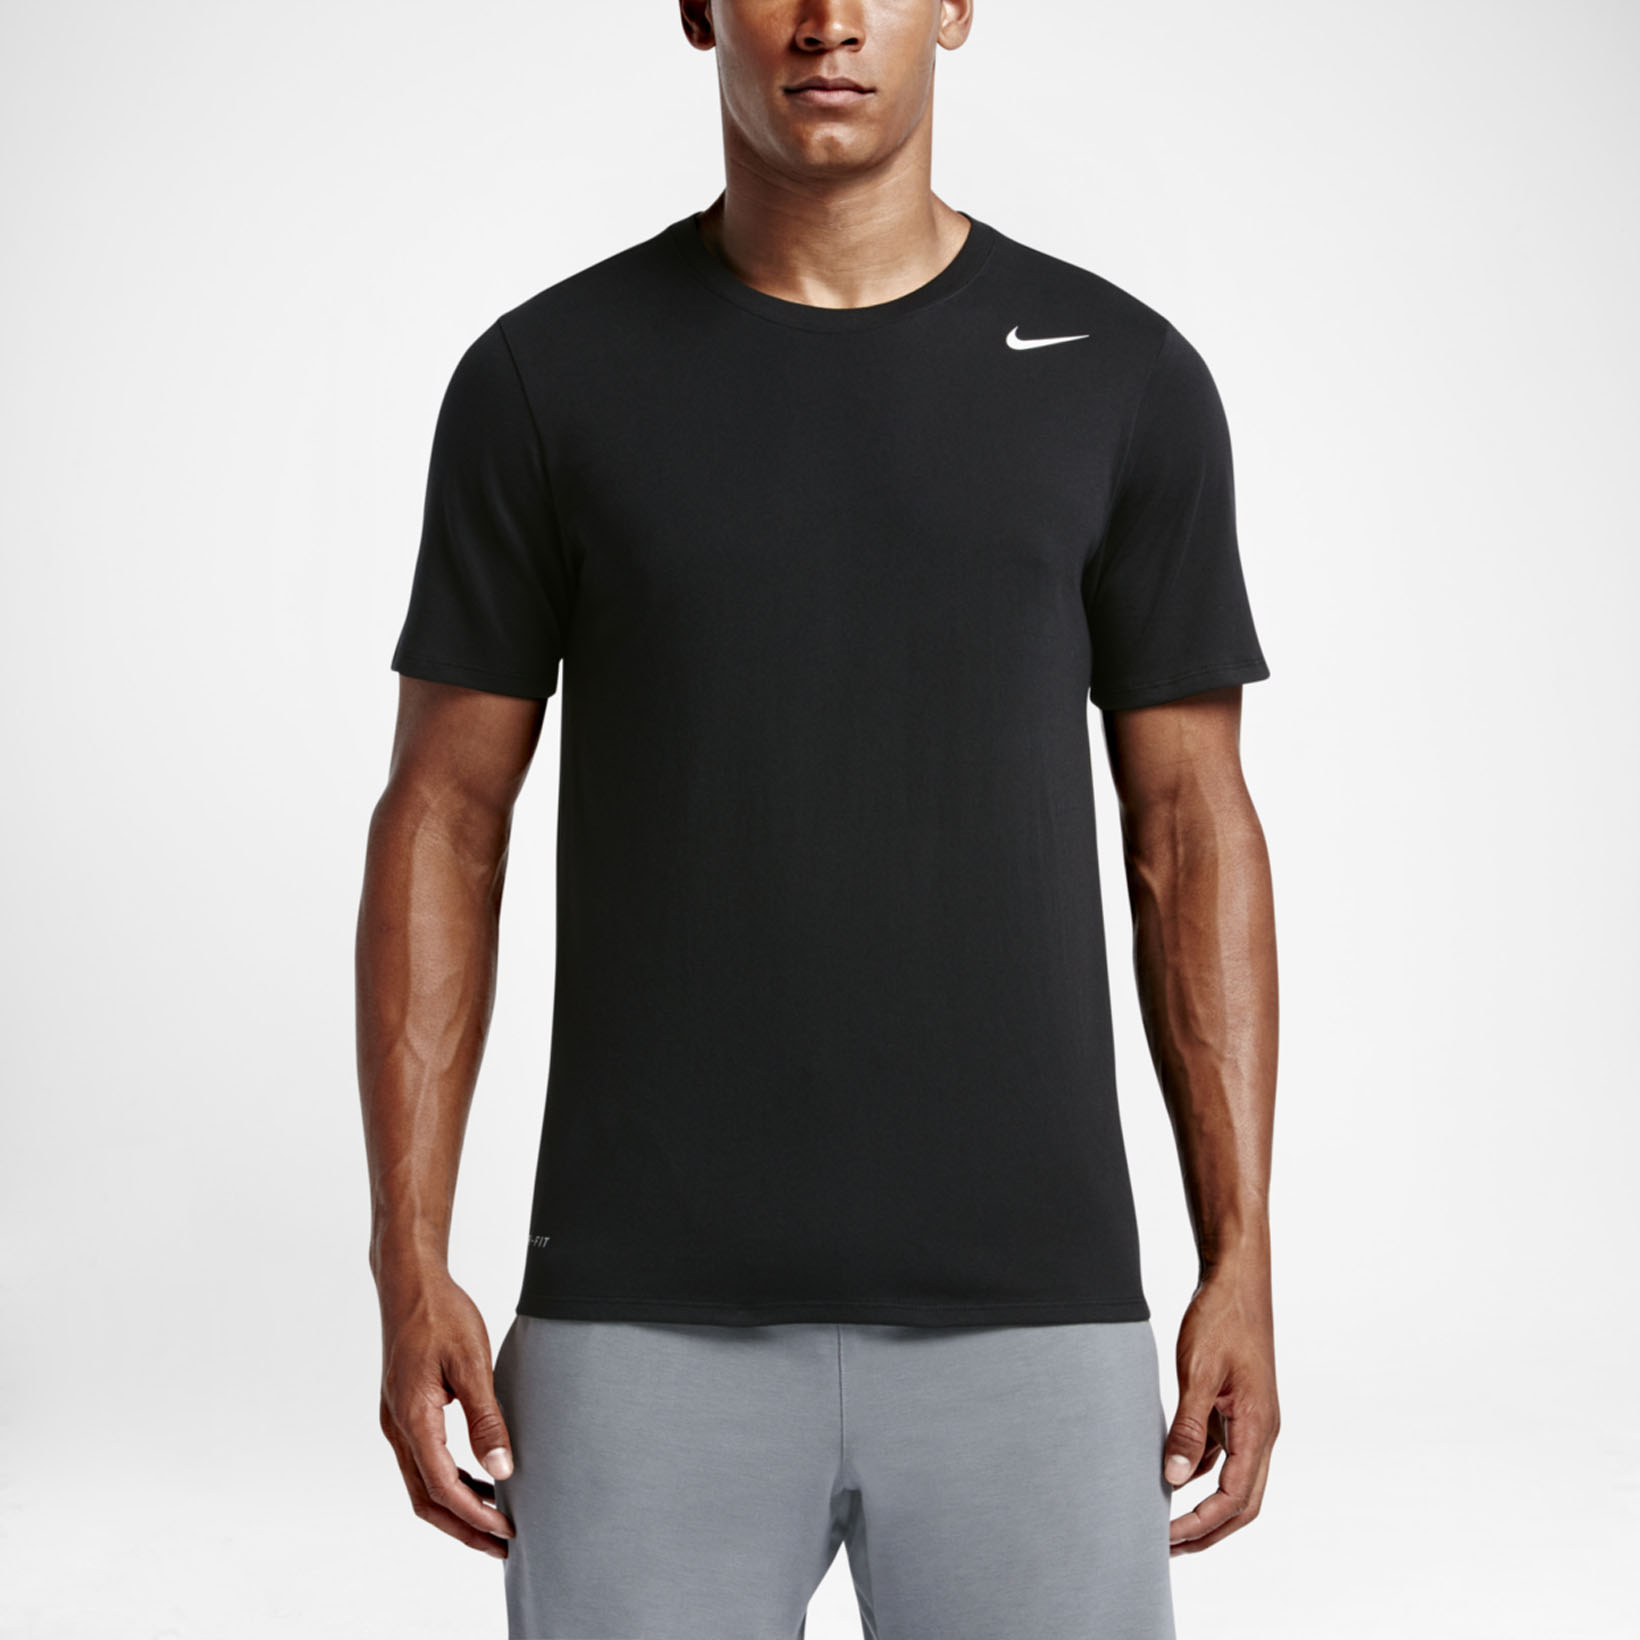 Мужская футболка Nike Dri-FIT Cotton Version 2.0 SS 706625-010